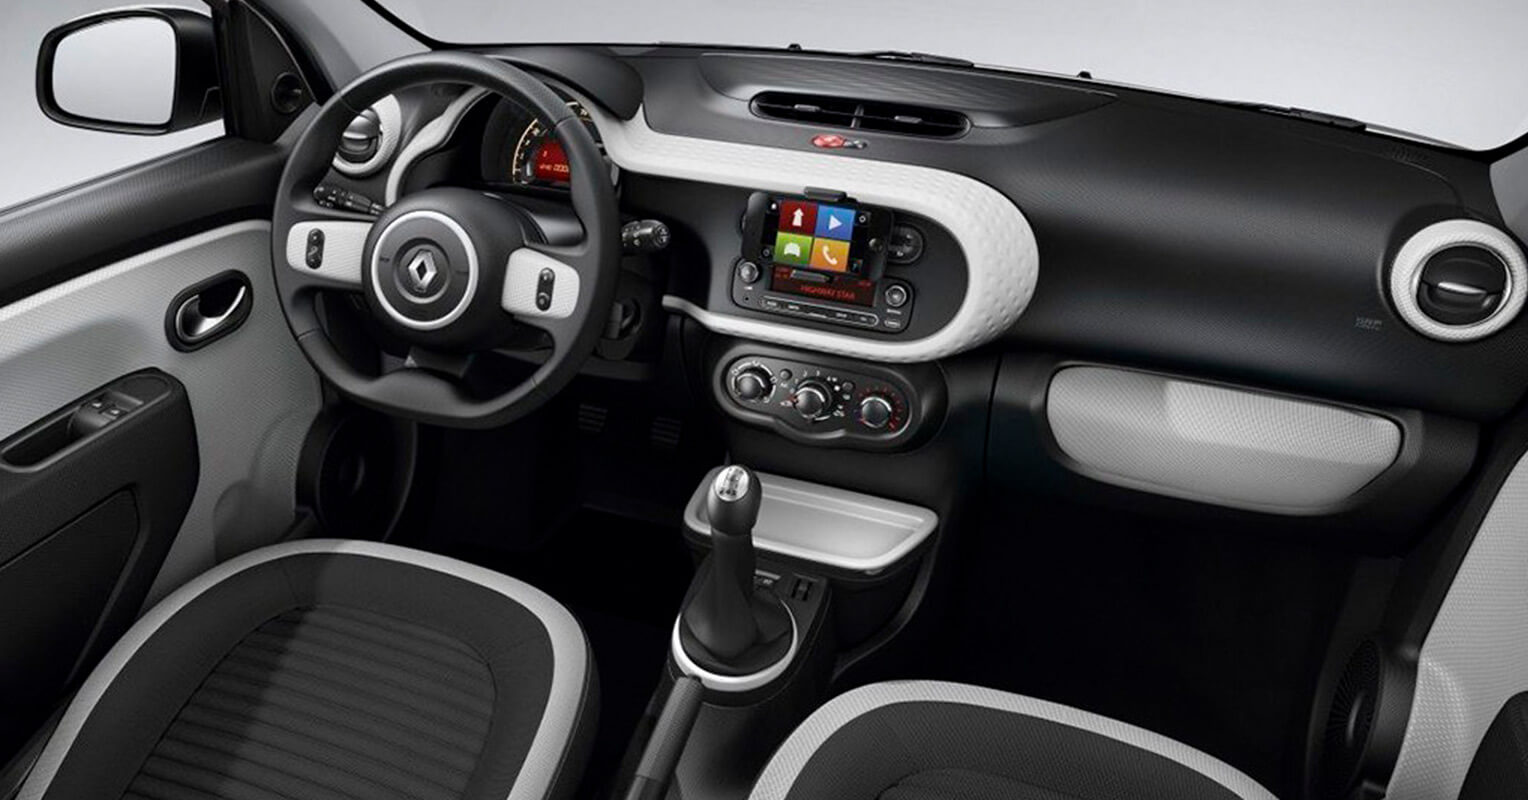 Renault Twingo 2018 interior